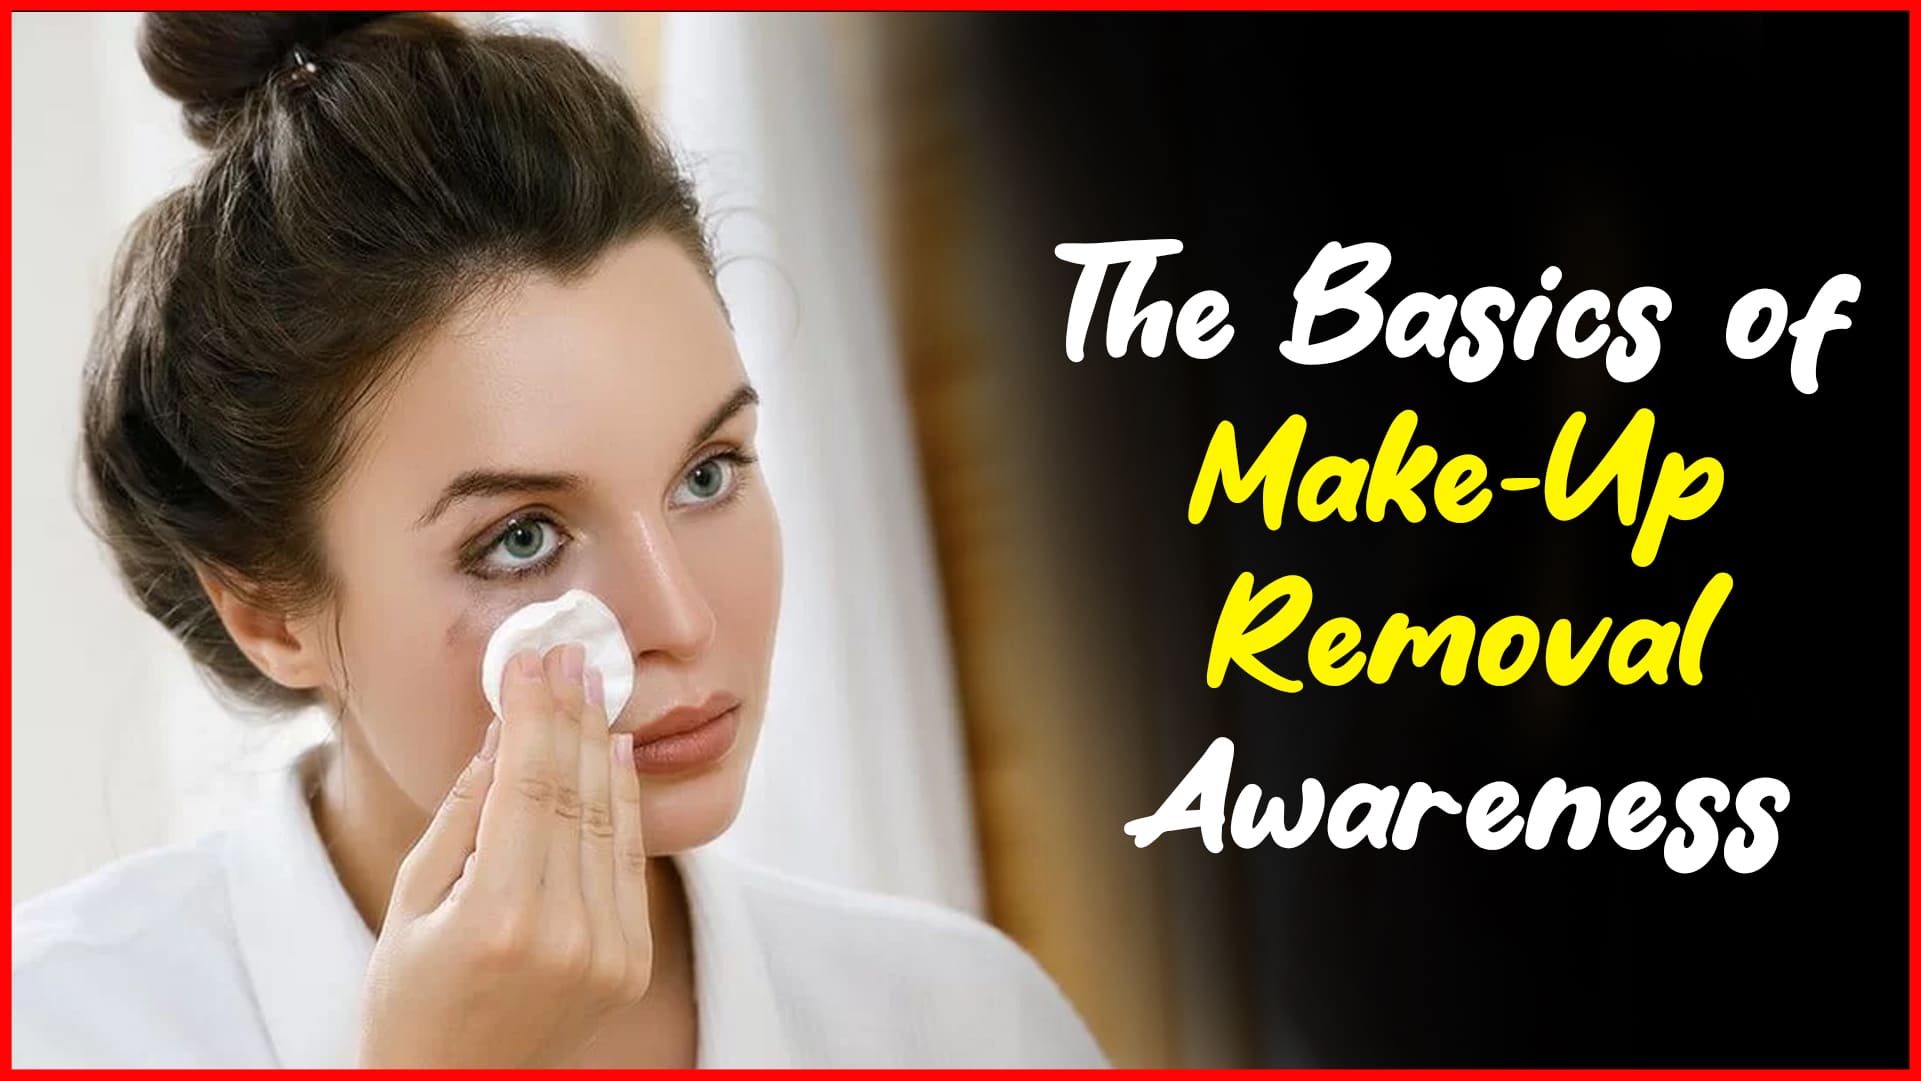 The basics of make-up removal awareness